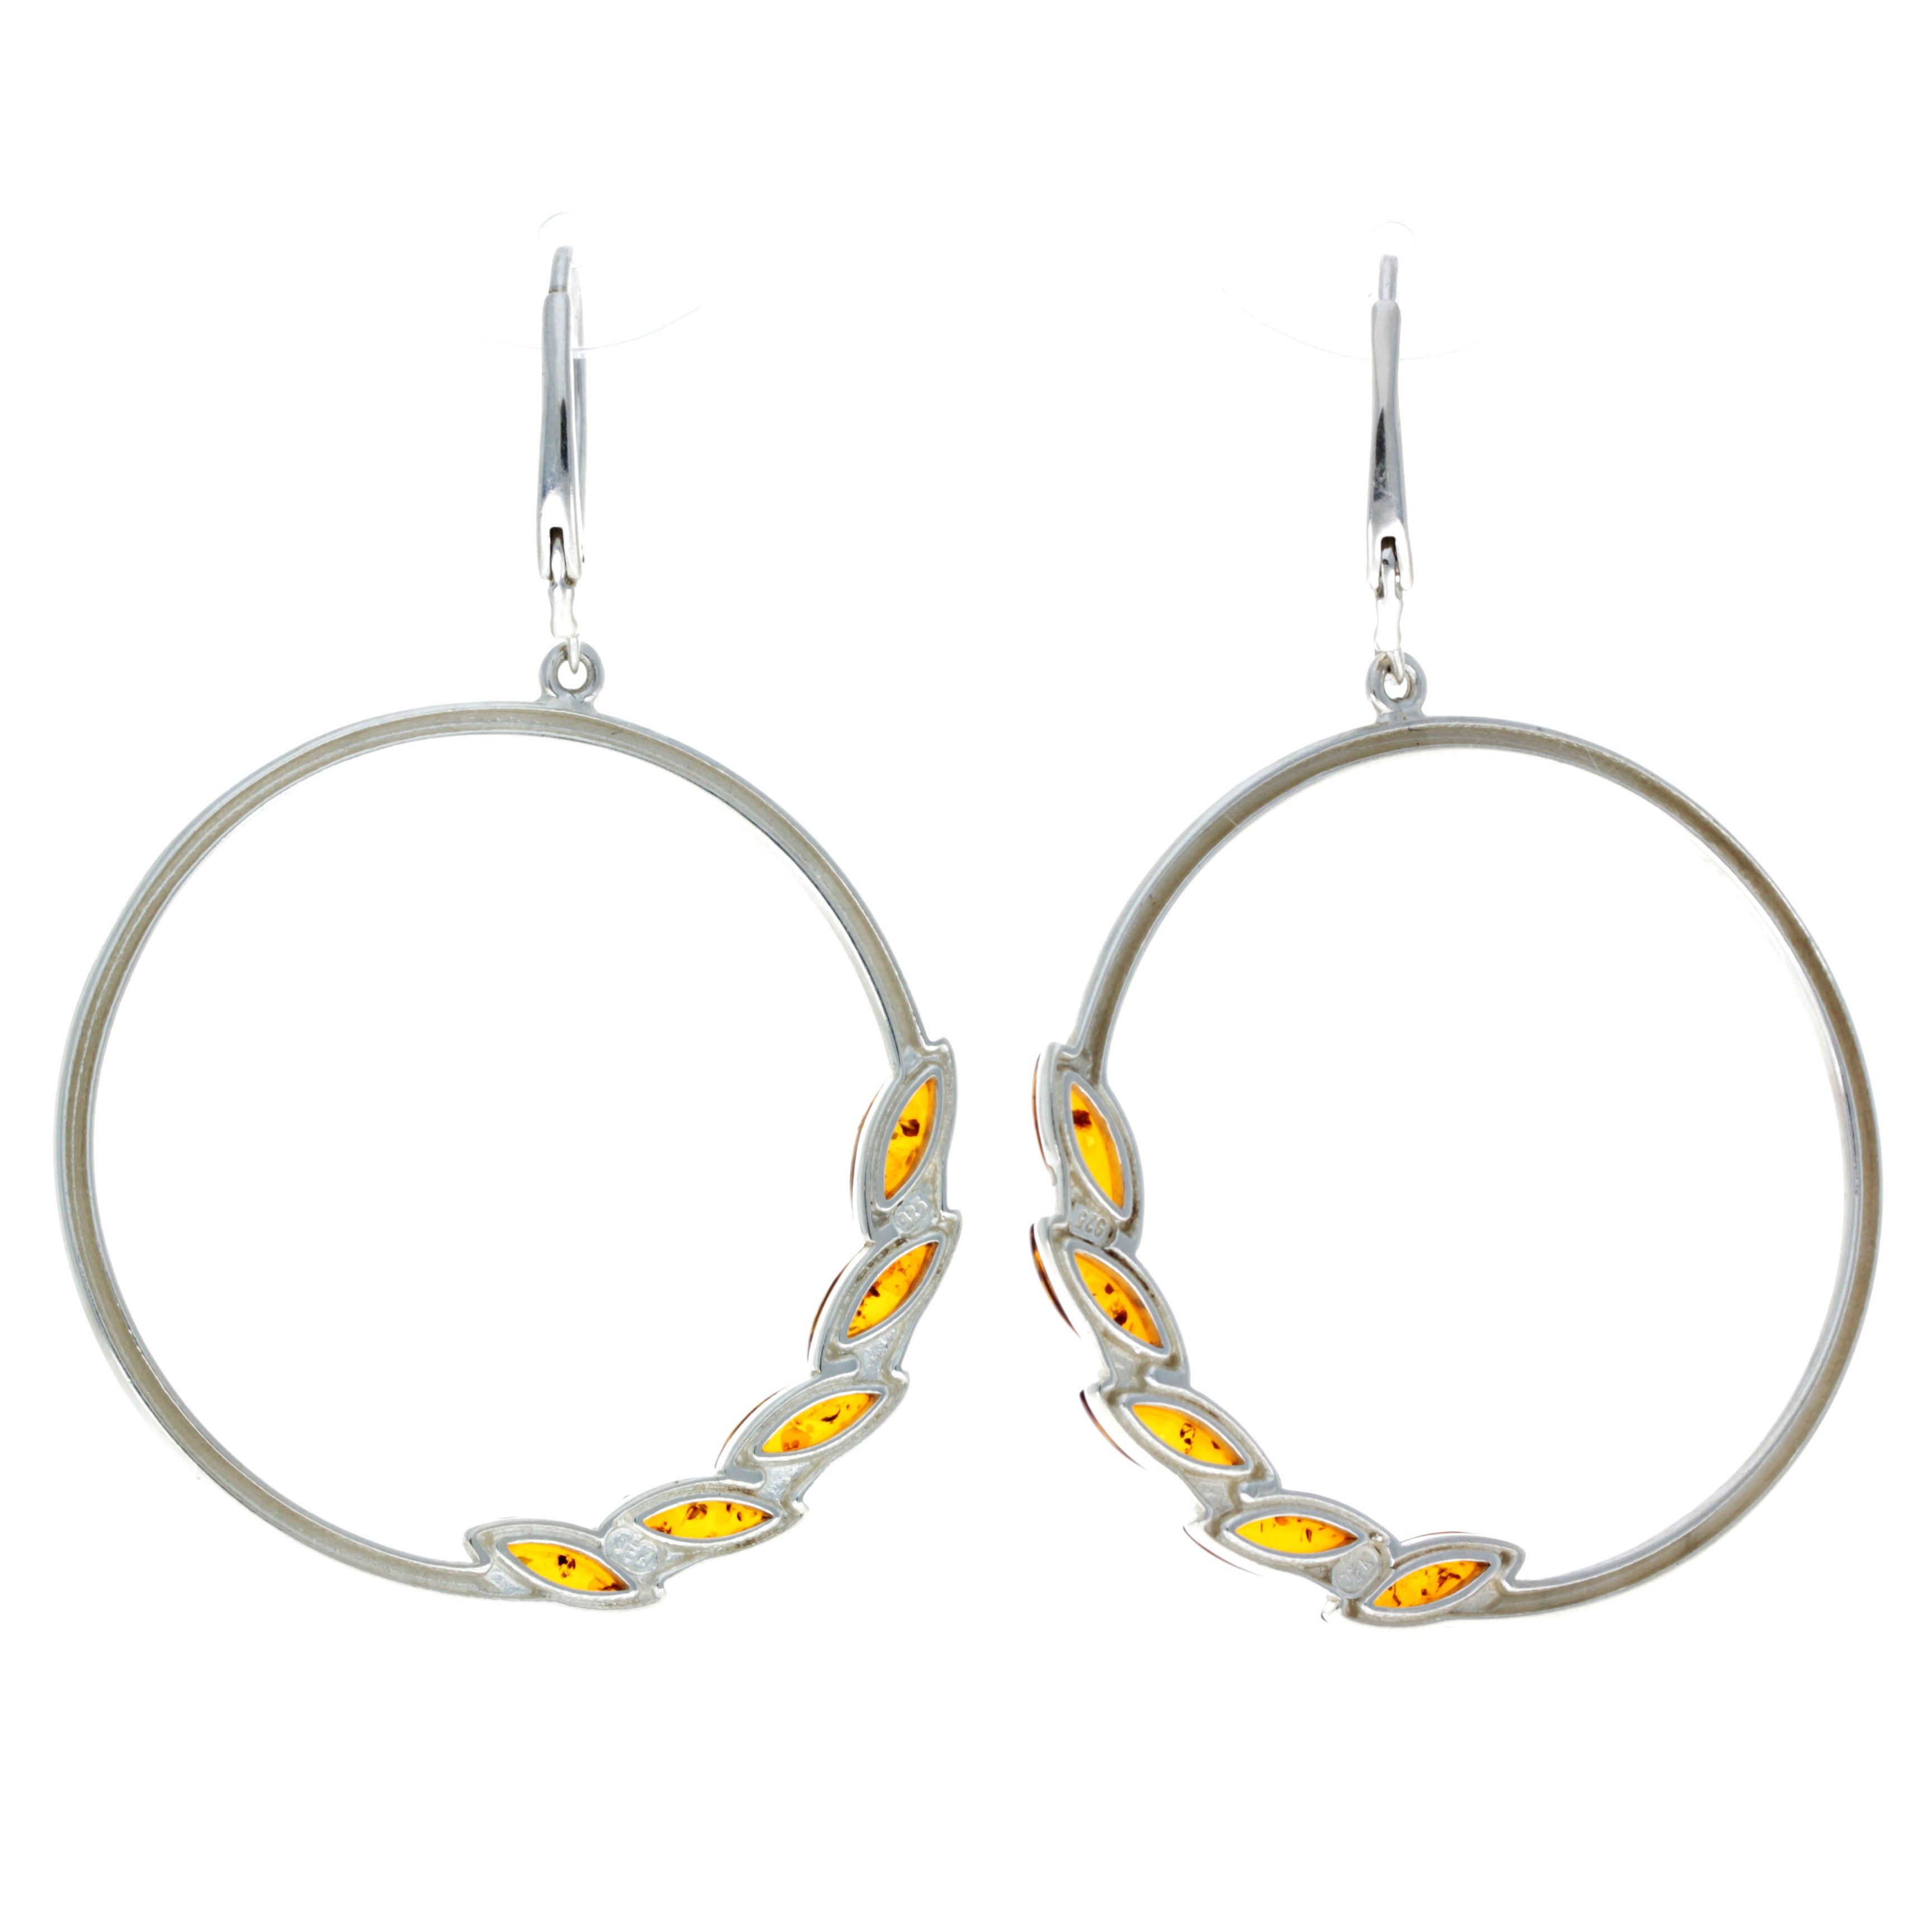 925 Sterling Silver & Baltic Amber Large Drop Hoops Earrings - AA032